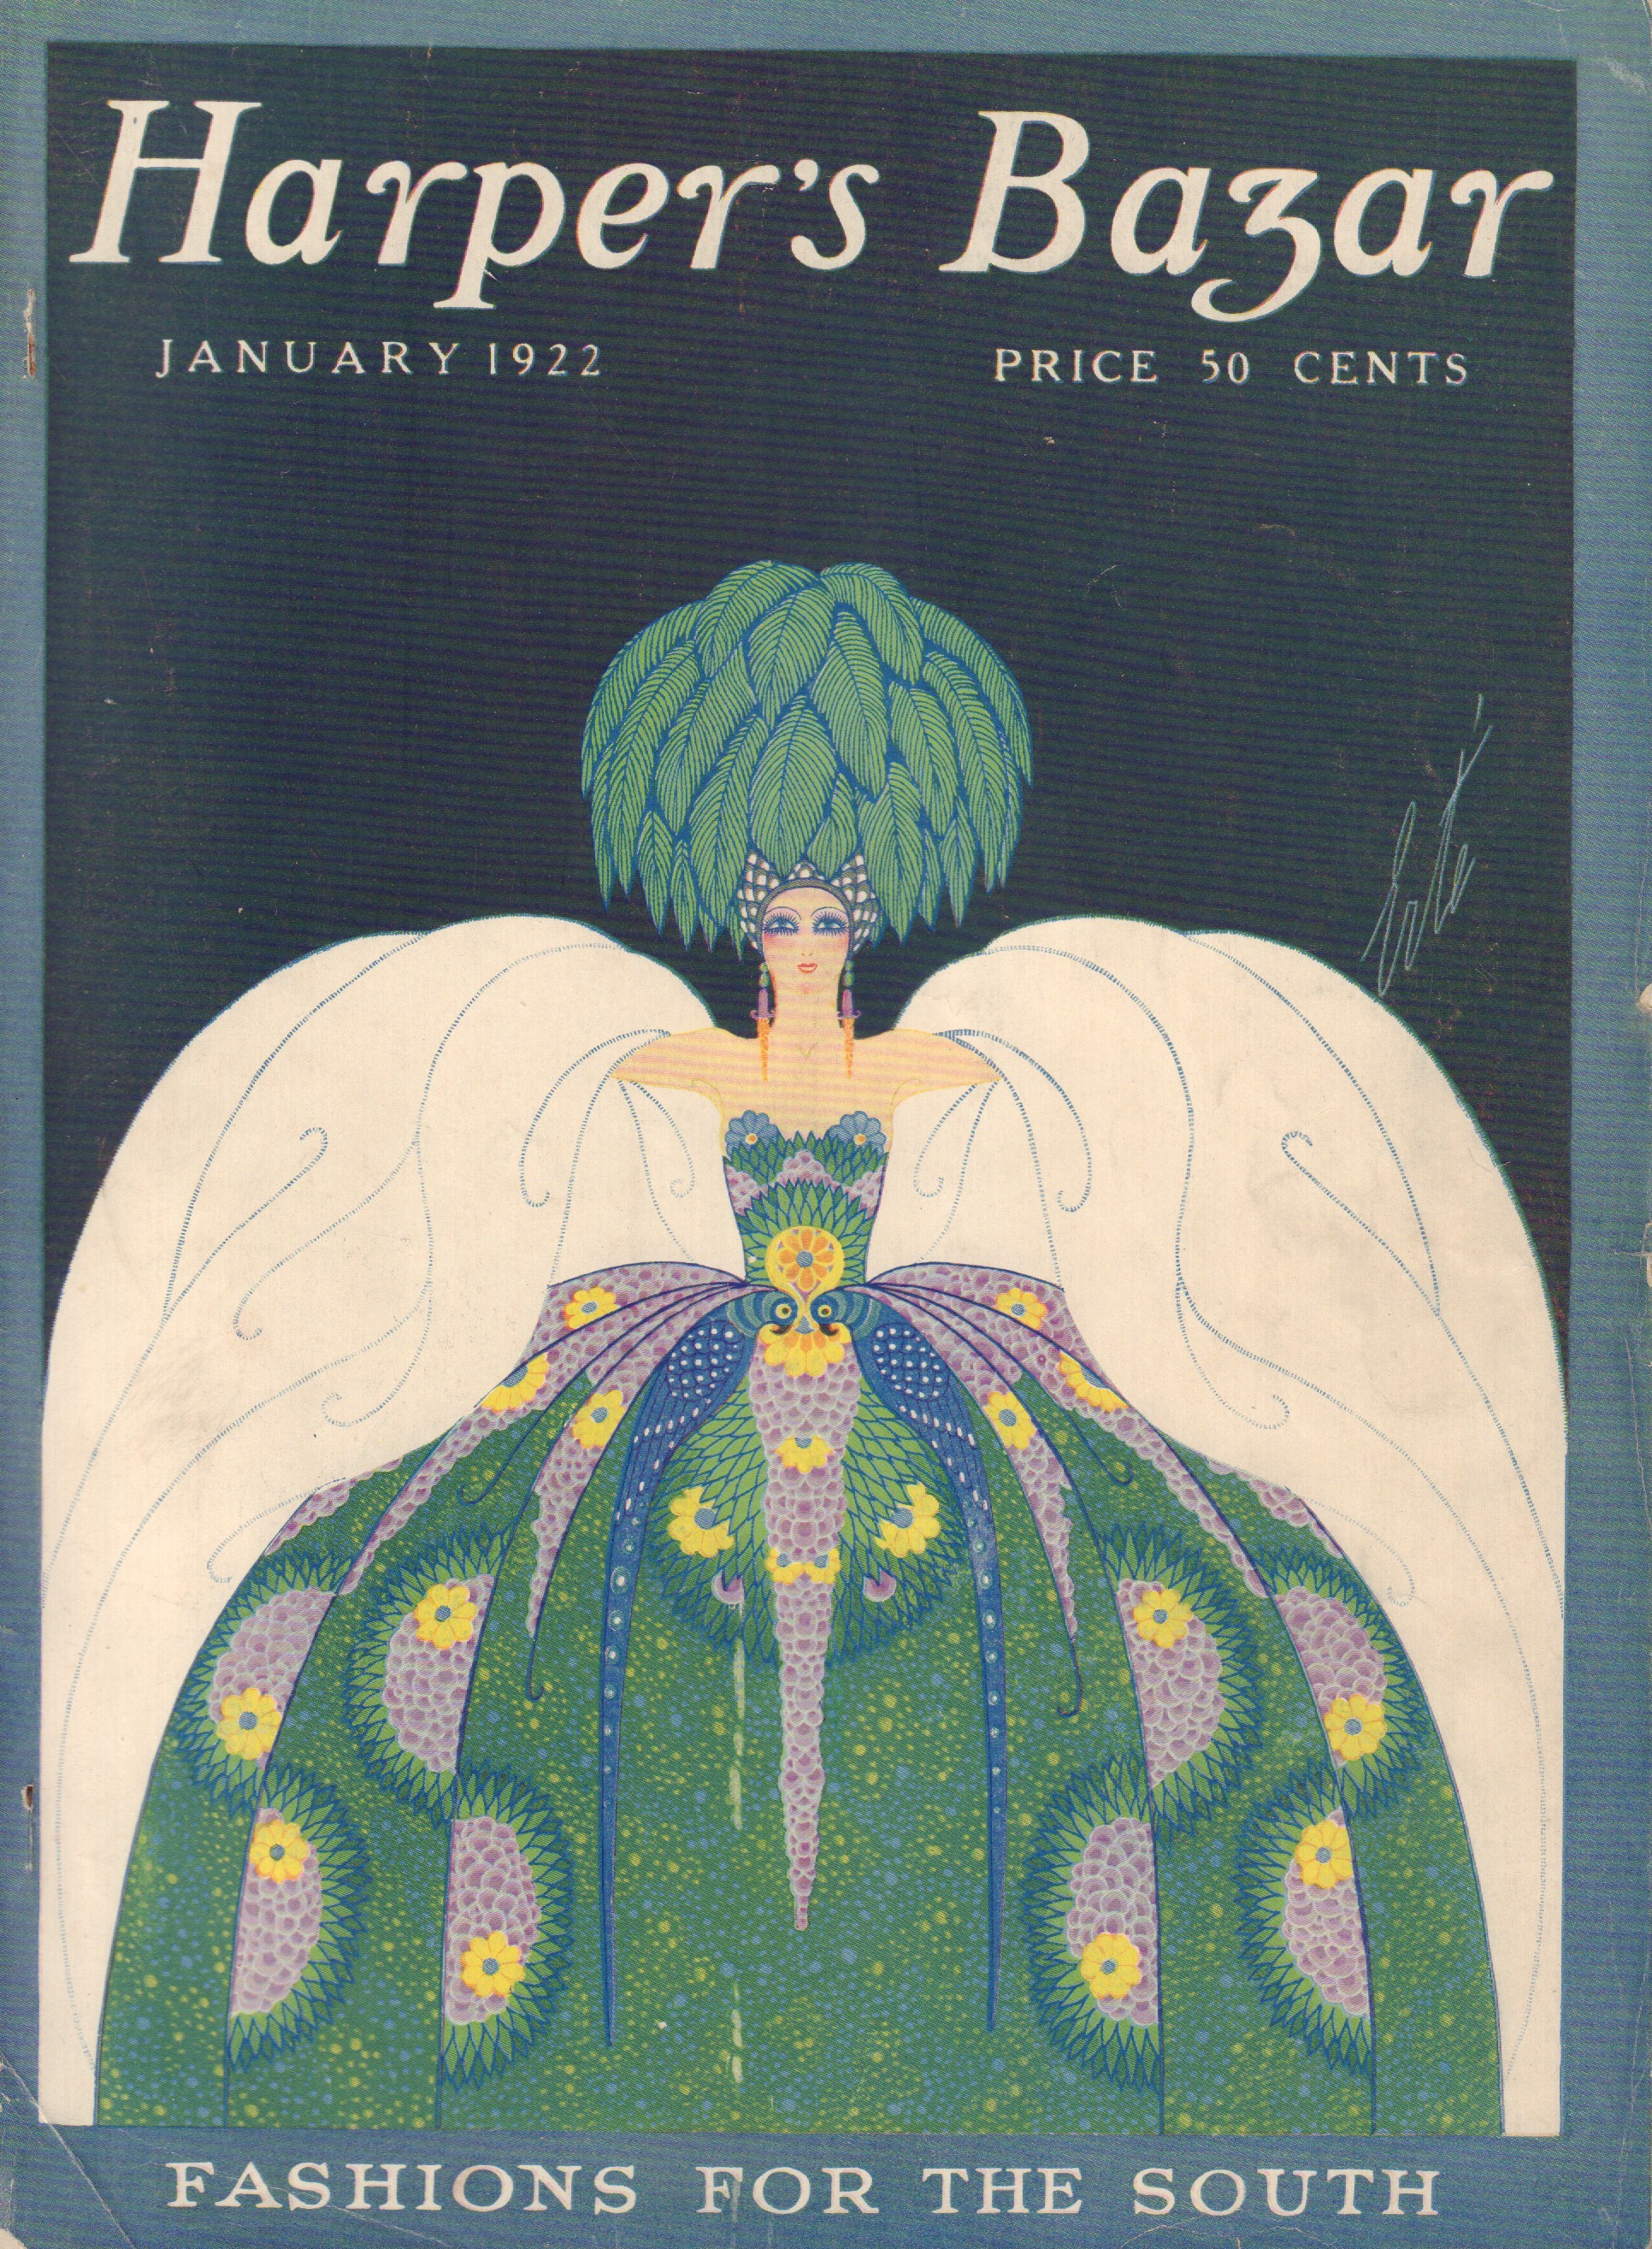 Harper's Bazar (Bazaar) January 1922